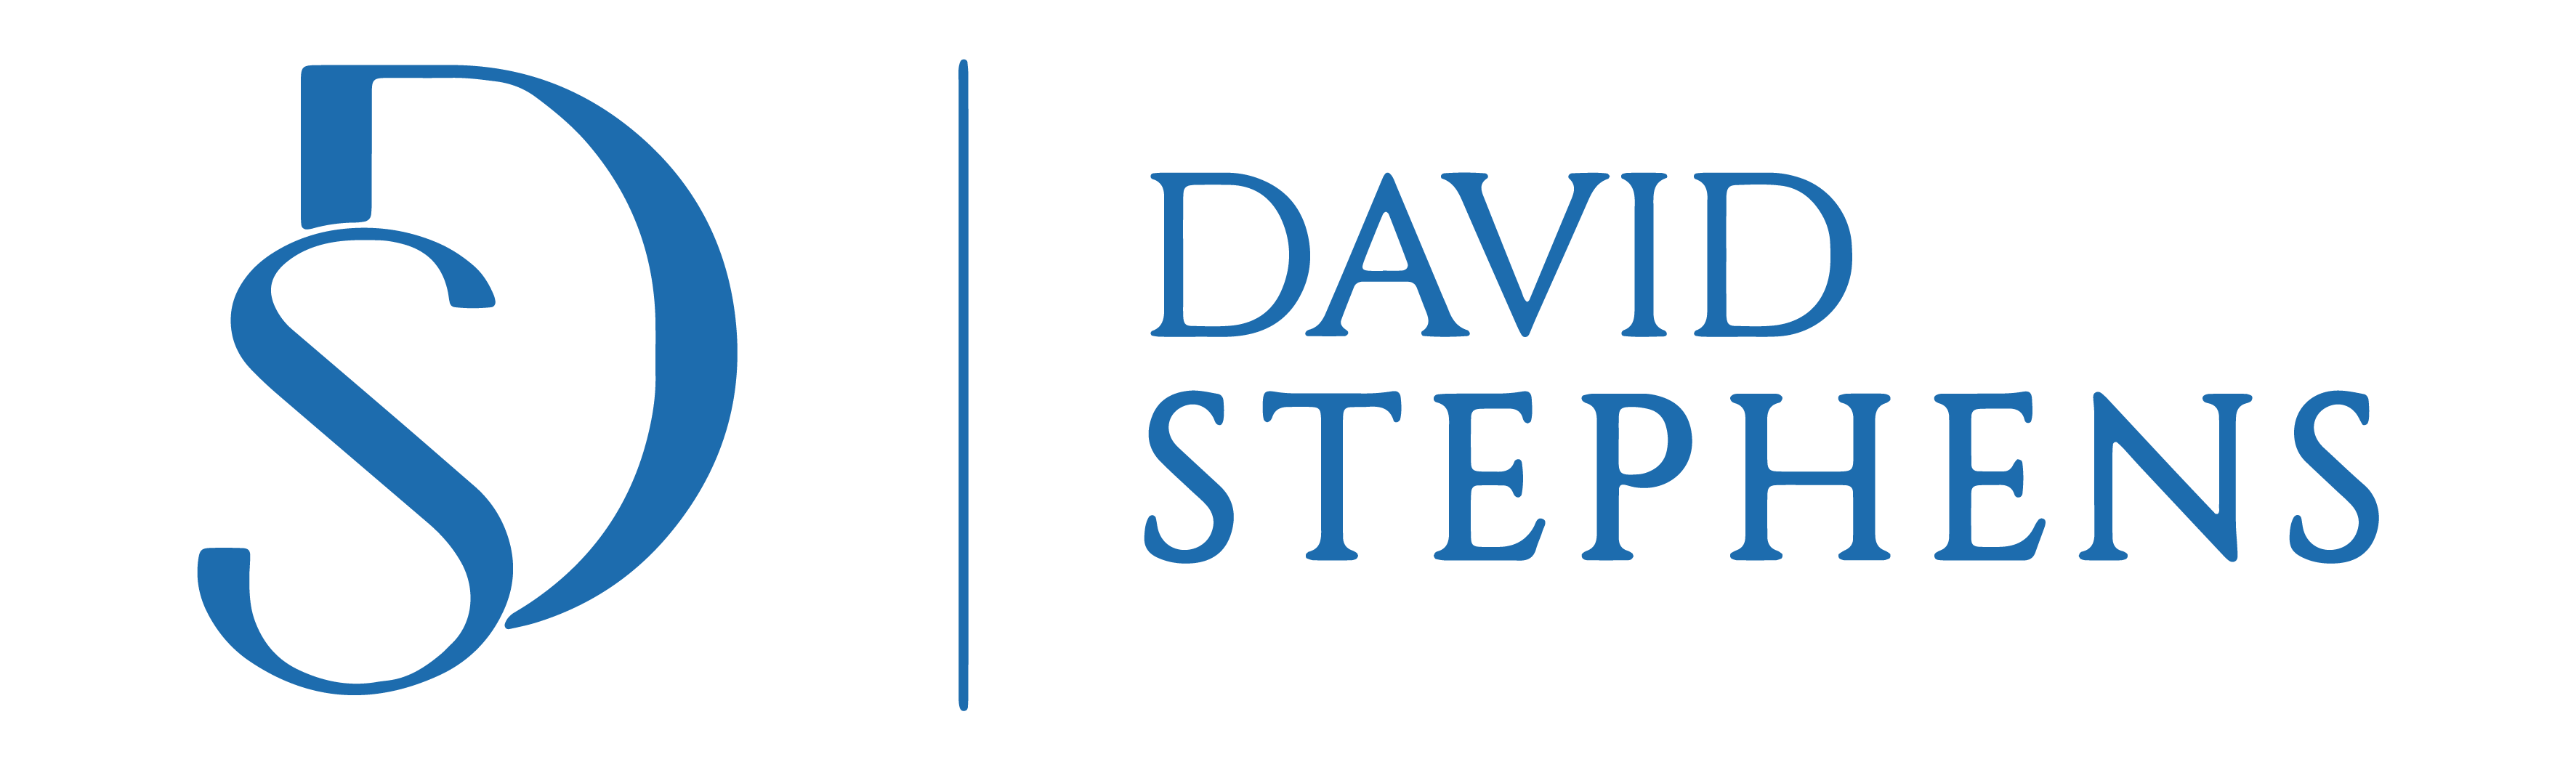 David Stephen-Logo-05-01